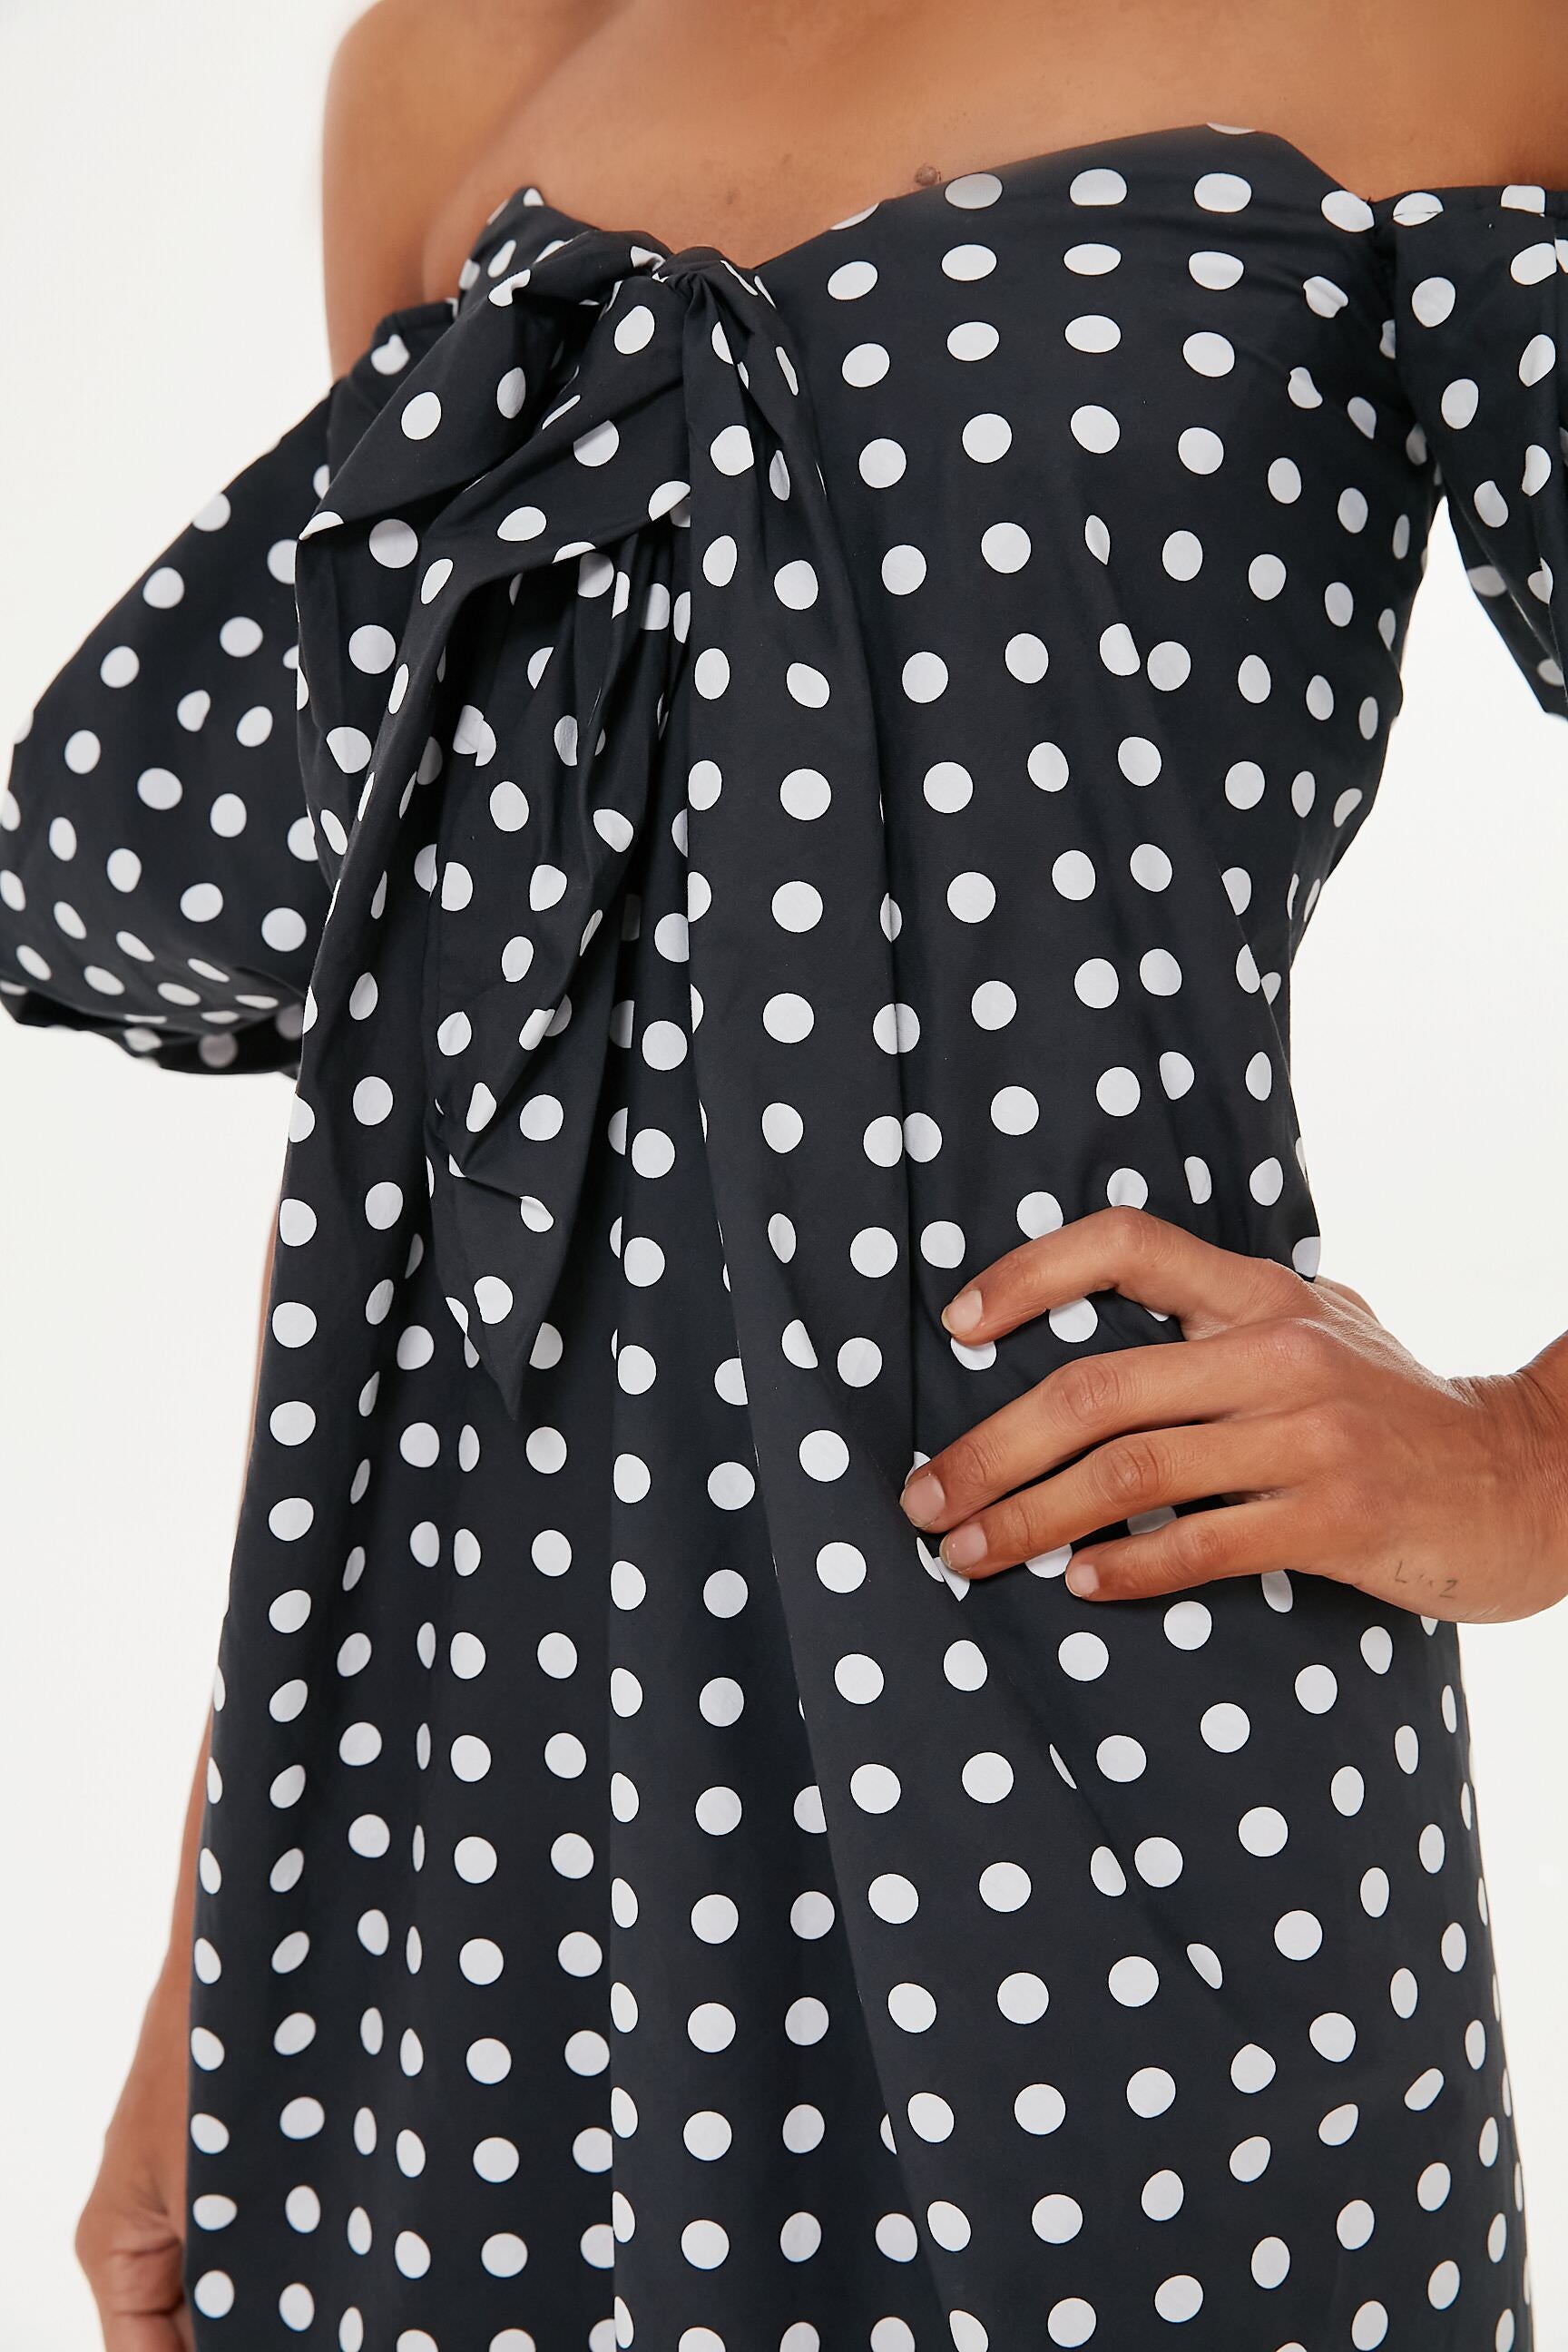 CAROLINE SUITS Women's Elegant Stylish Fashion Polka Dots, 52% OFF